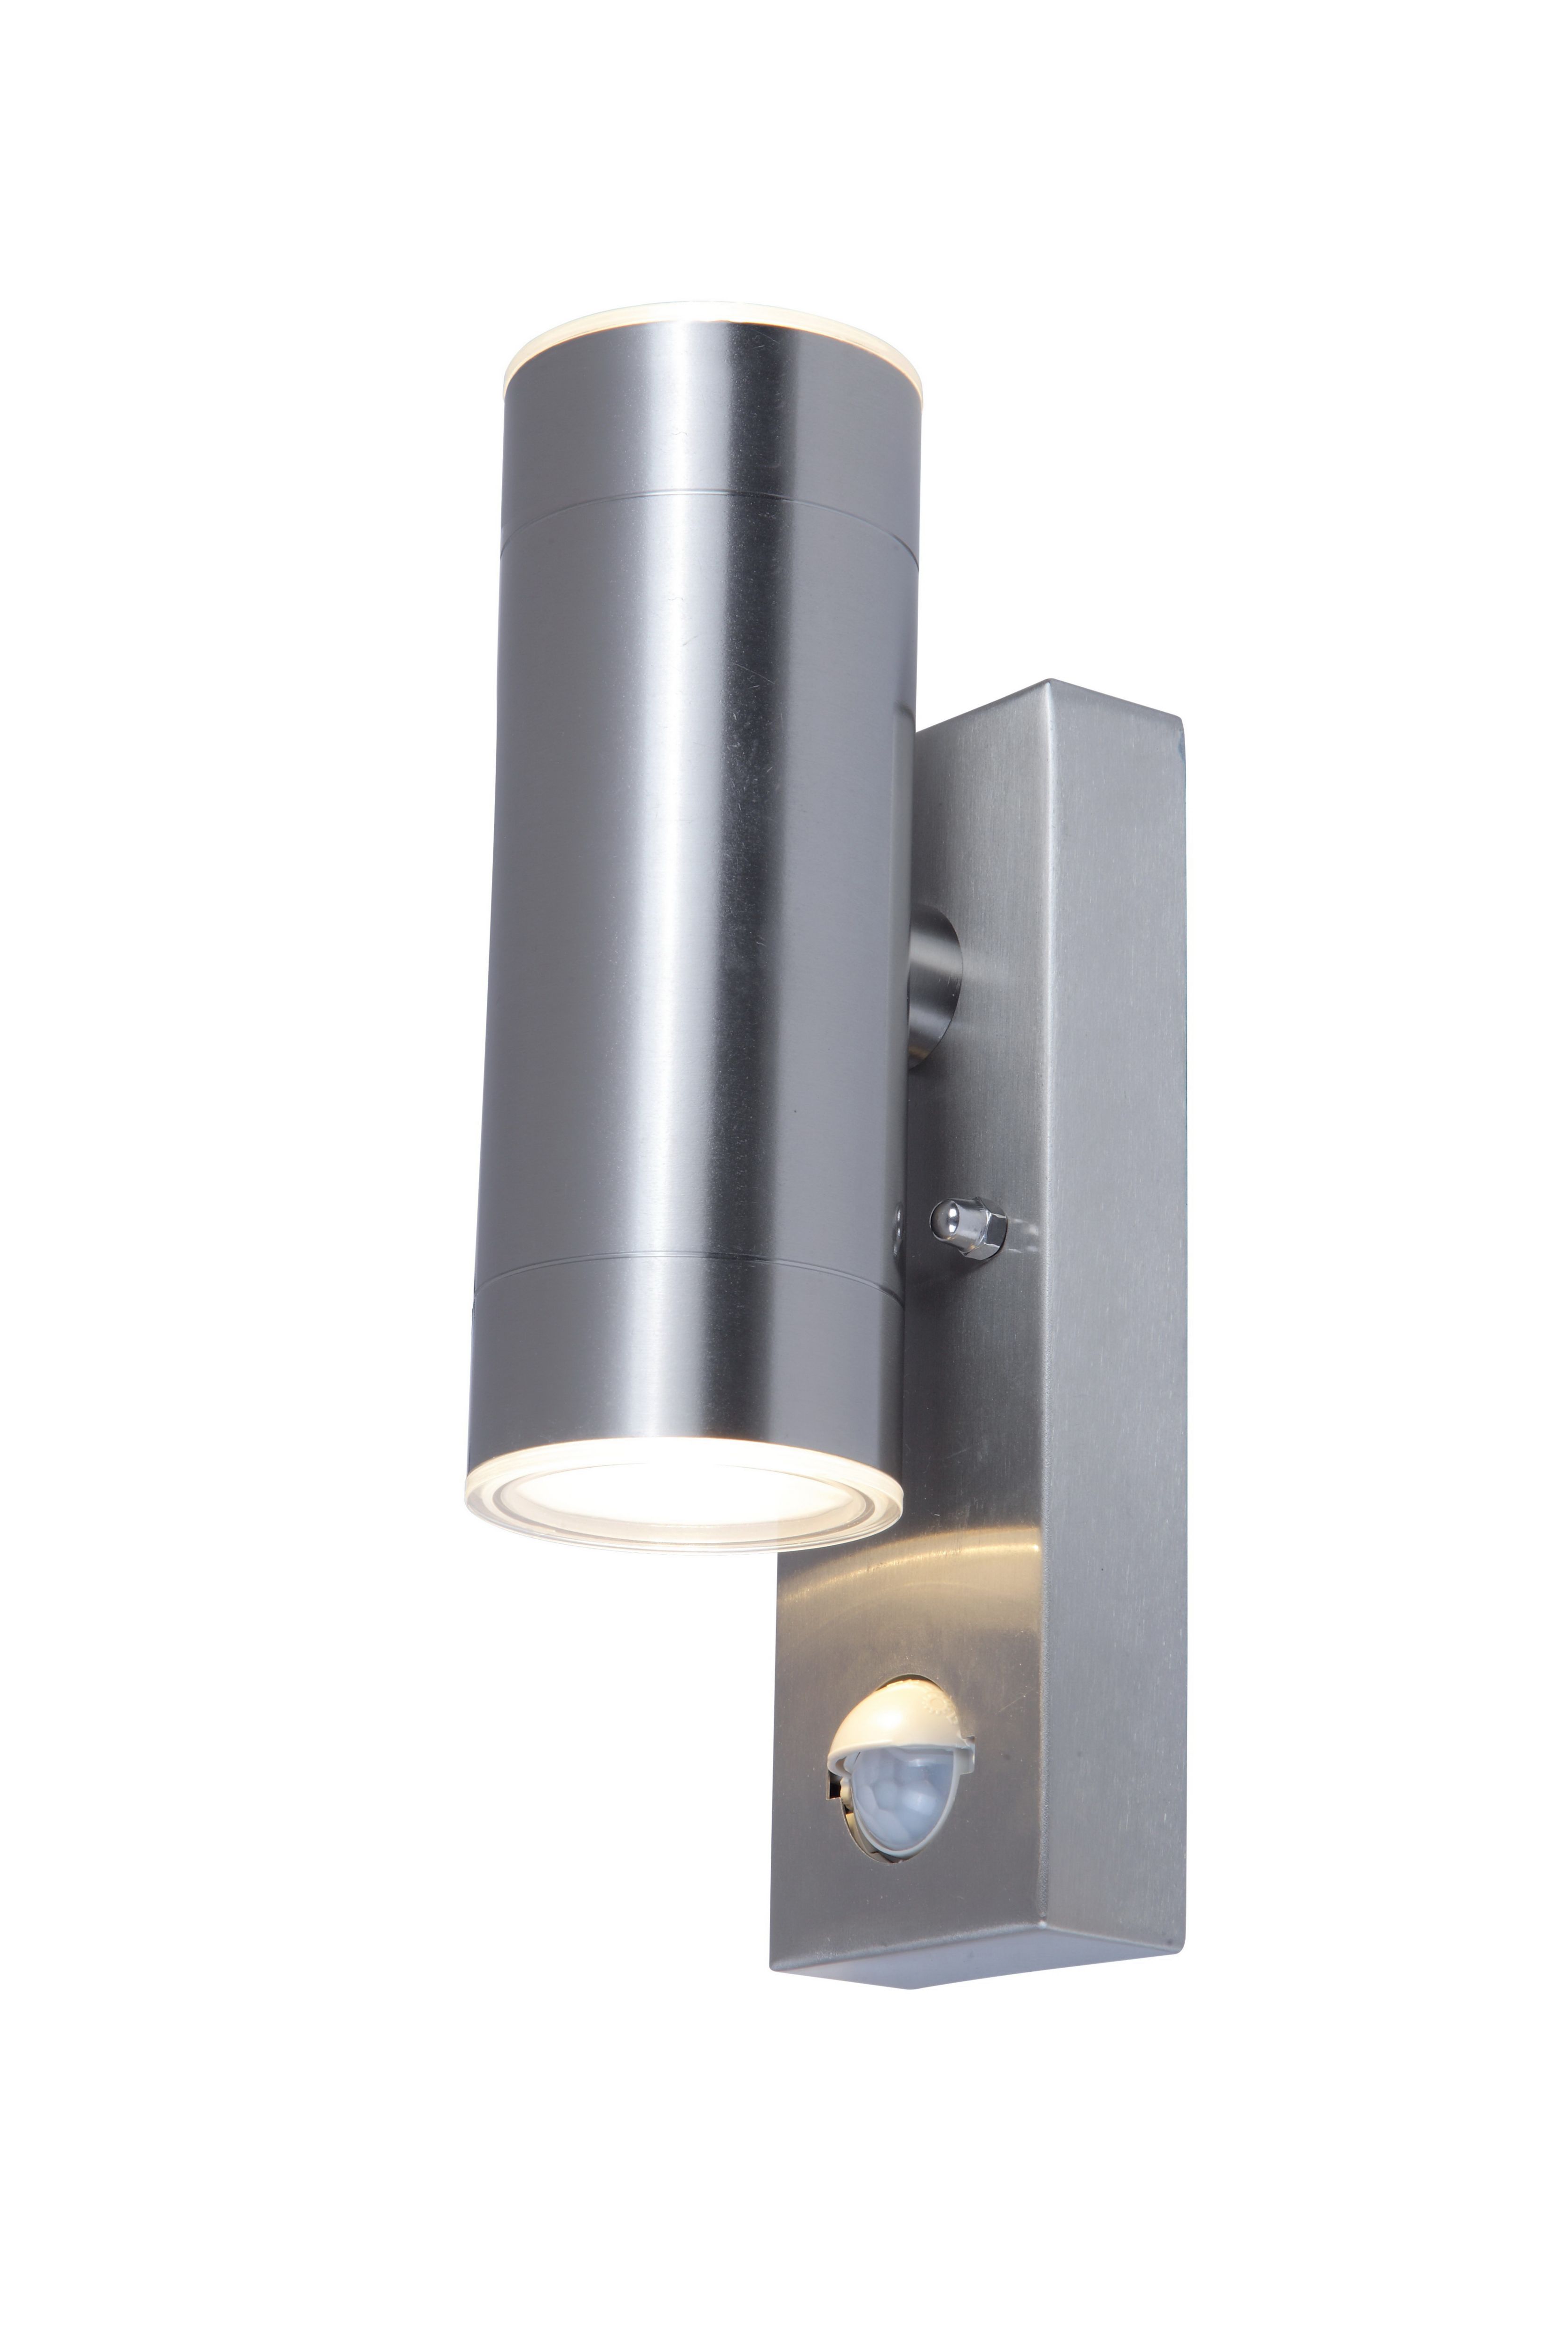 GoodHome Fixed Matt Stainless steel Integrated LED PIR Motion sensor Outdoor Wall light 9W